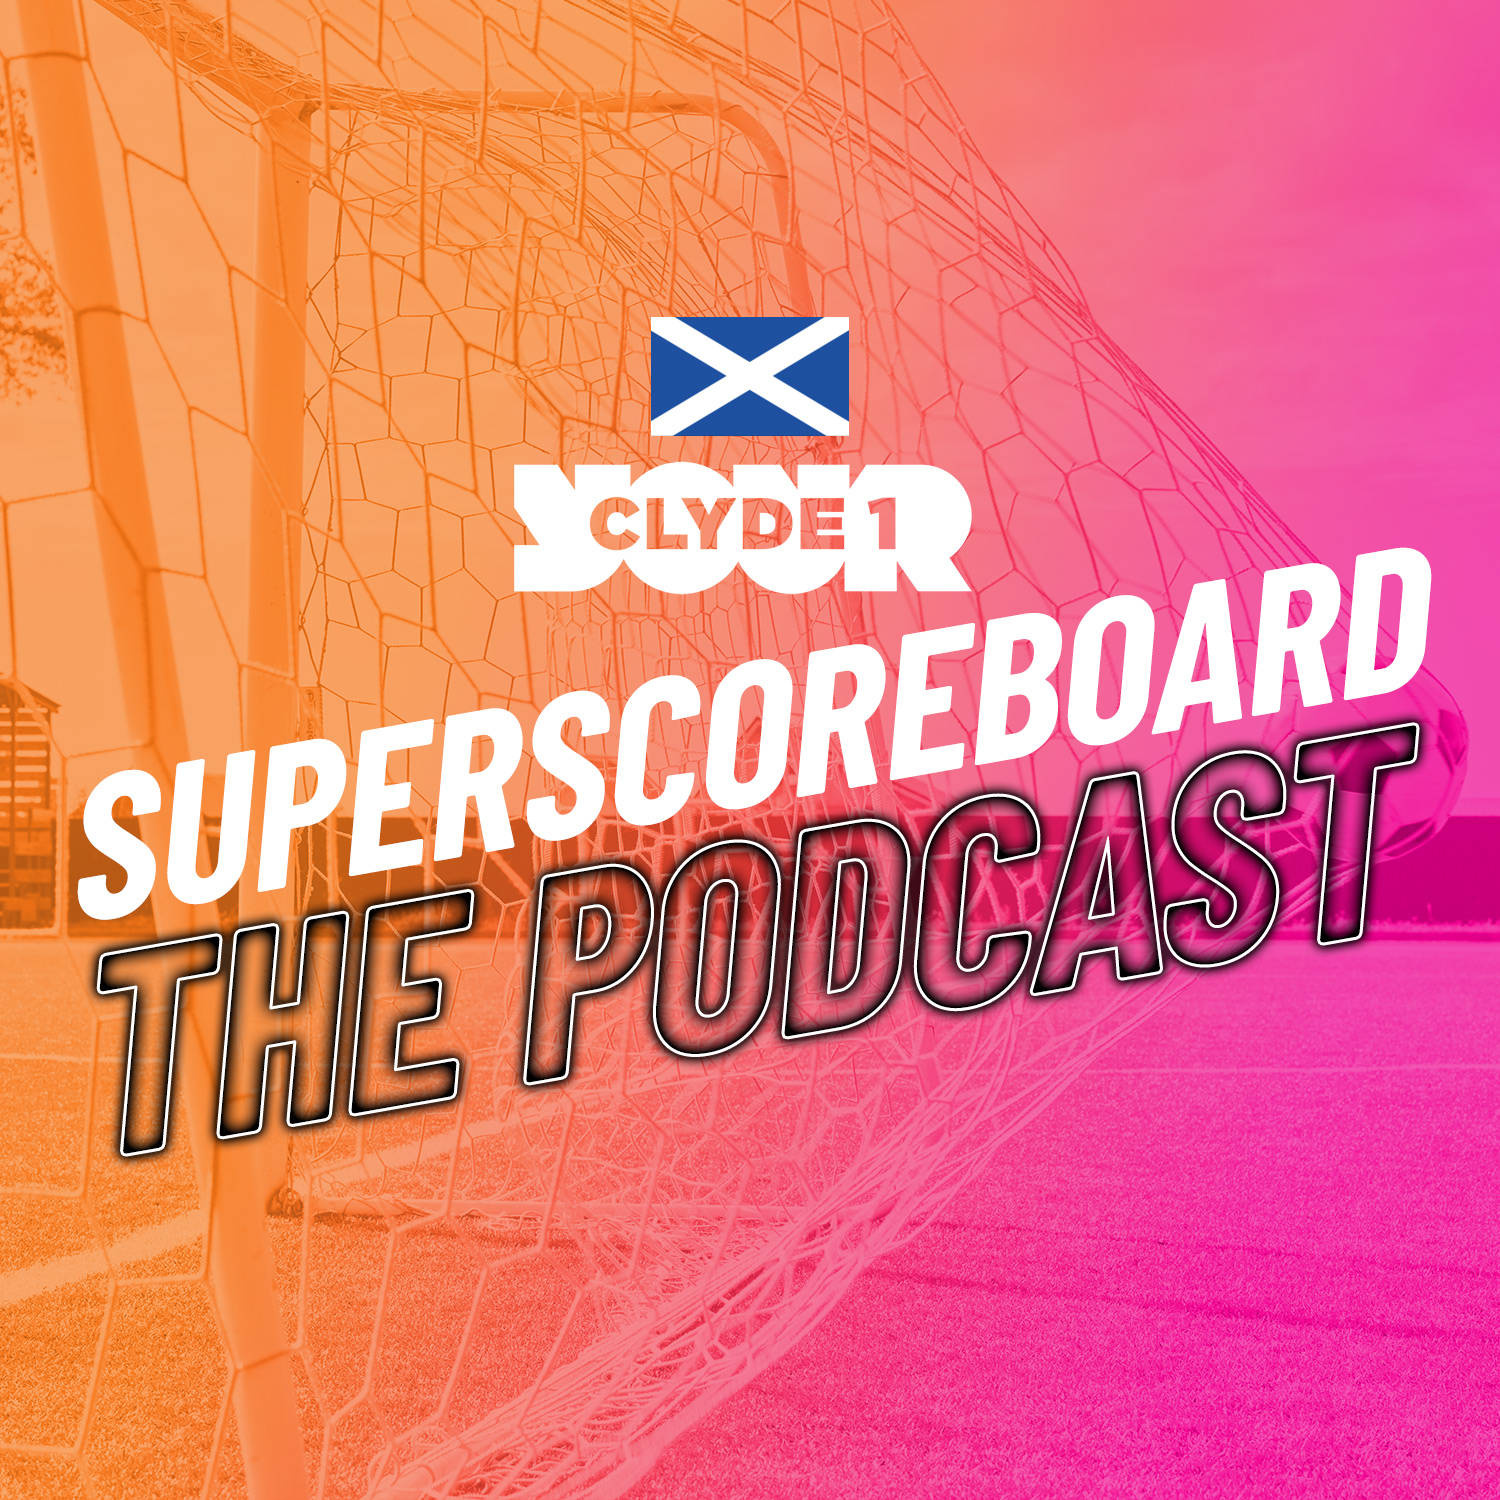 Wednesday 3rd January Clyde 1 Superscoreboard